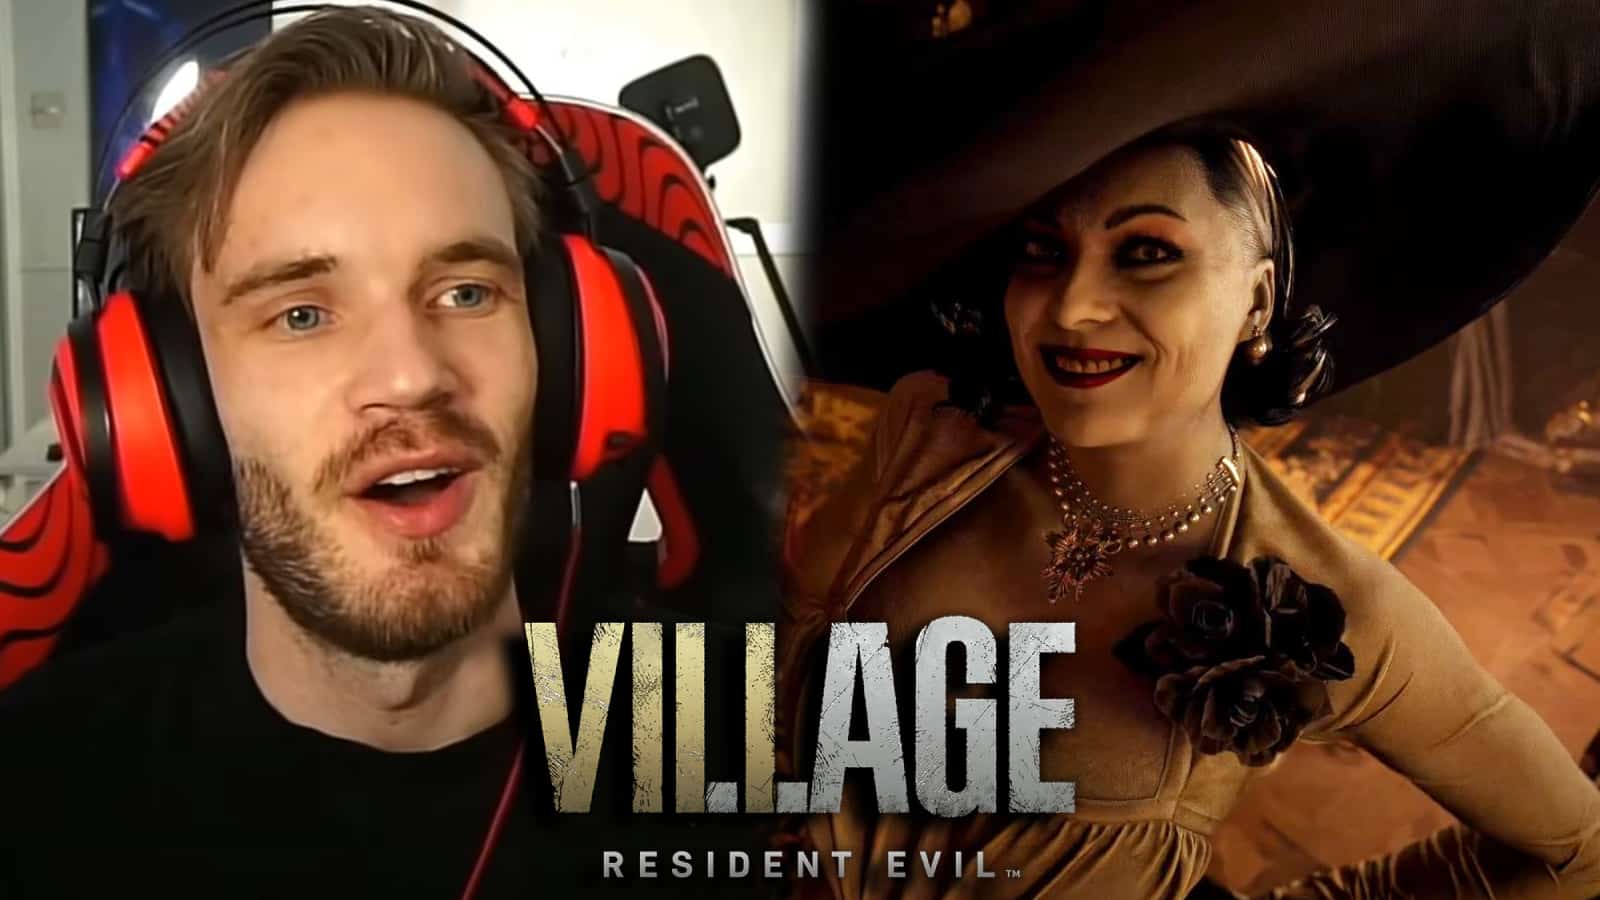 YouTuber PewDiePie next to Resident Evil Village Lady Dimitrescu